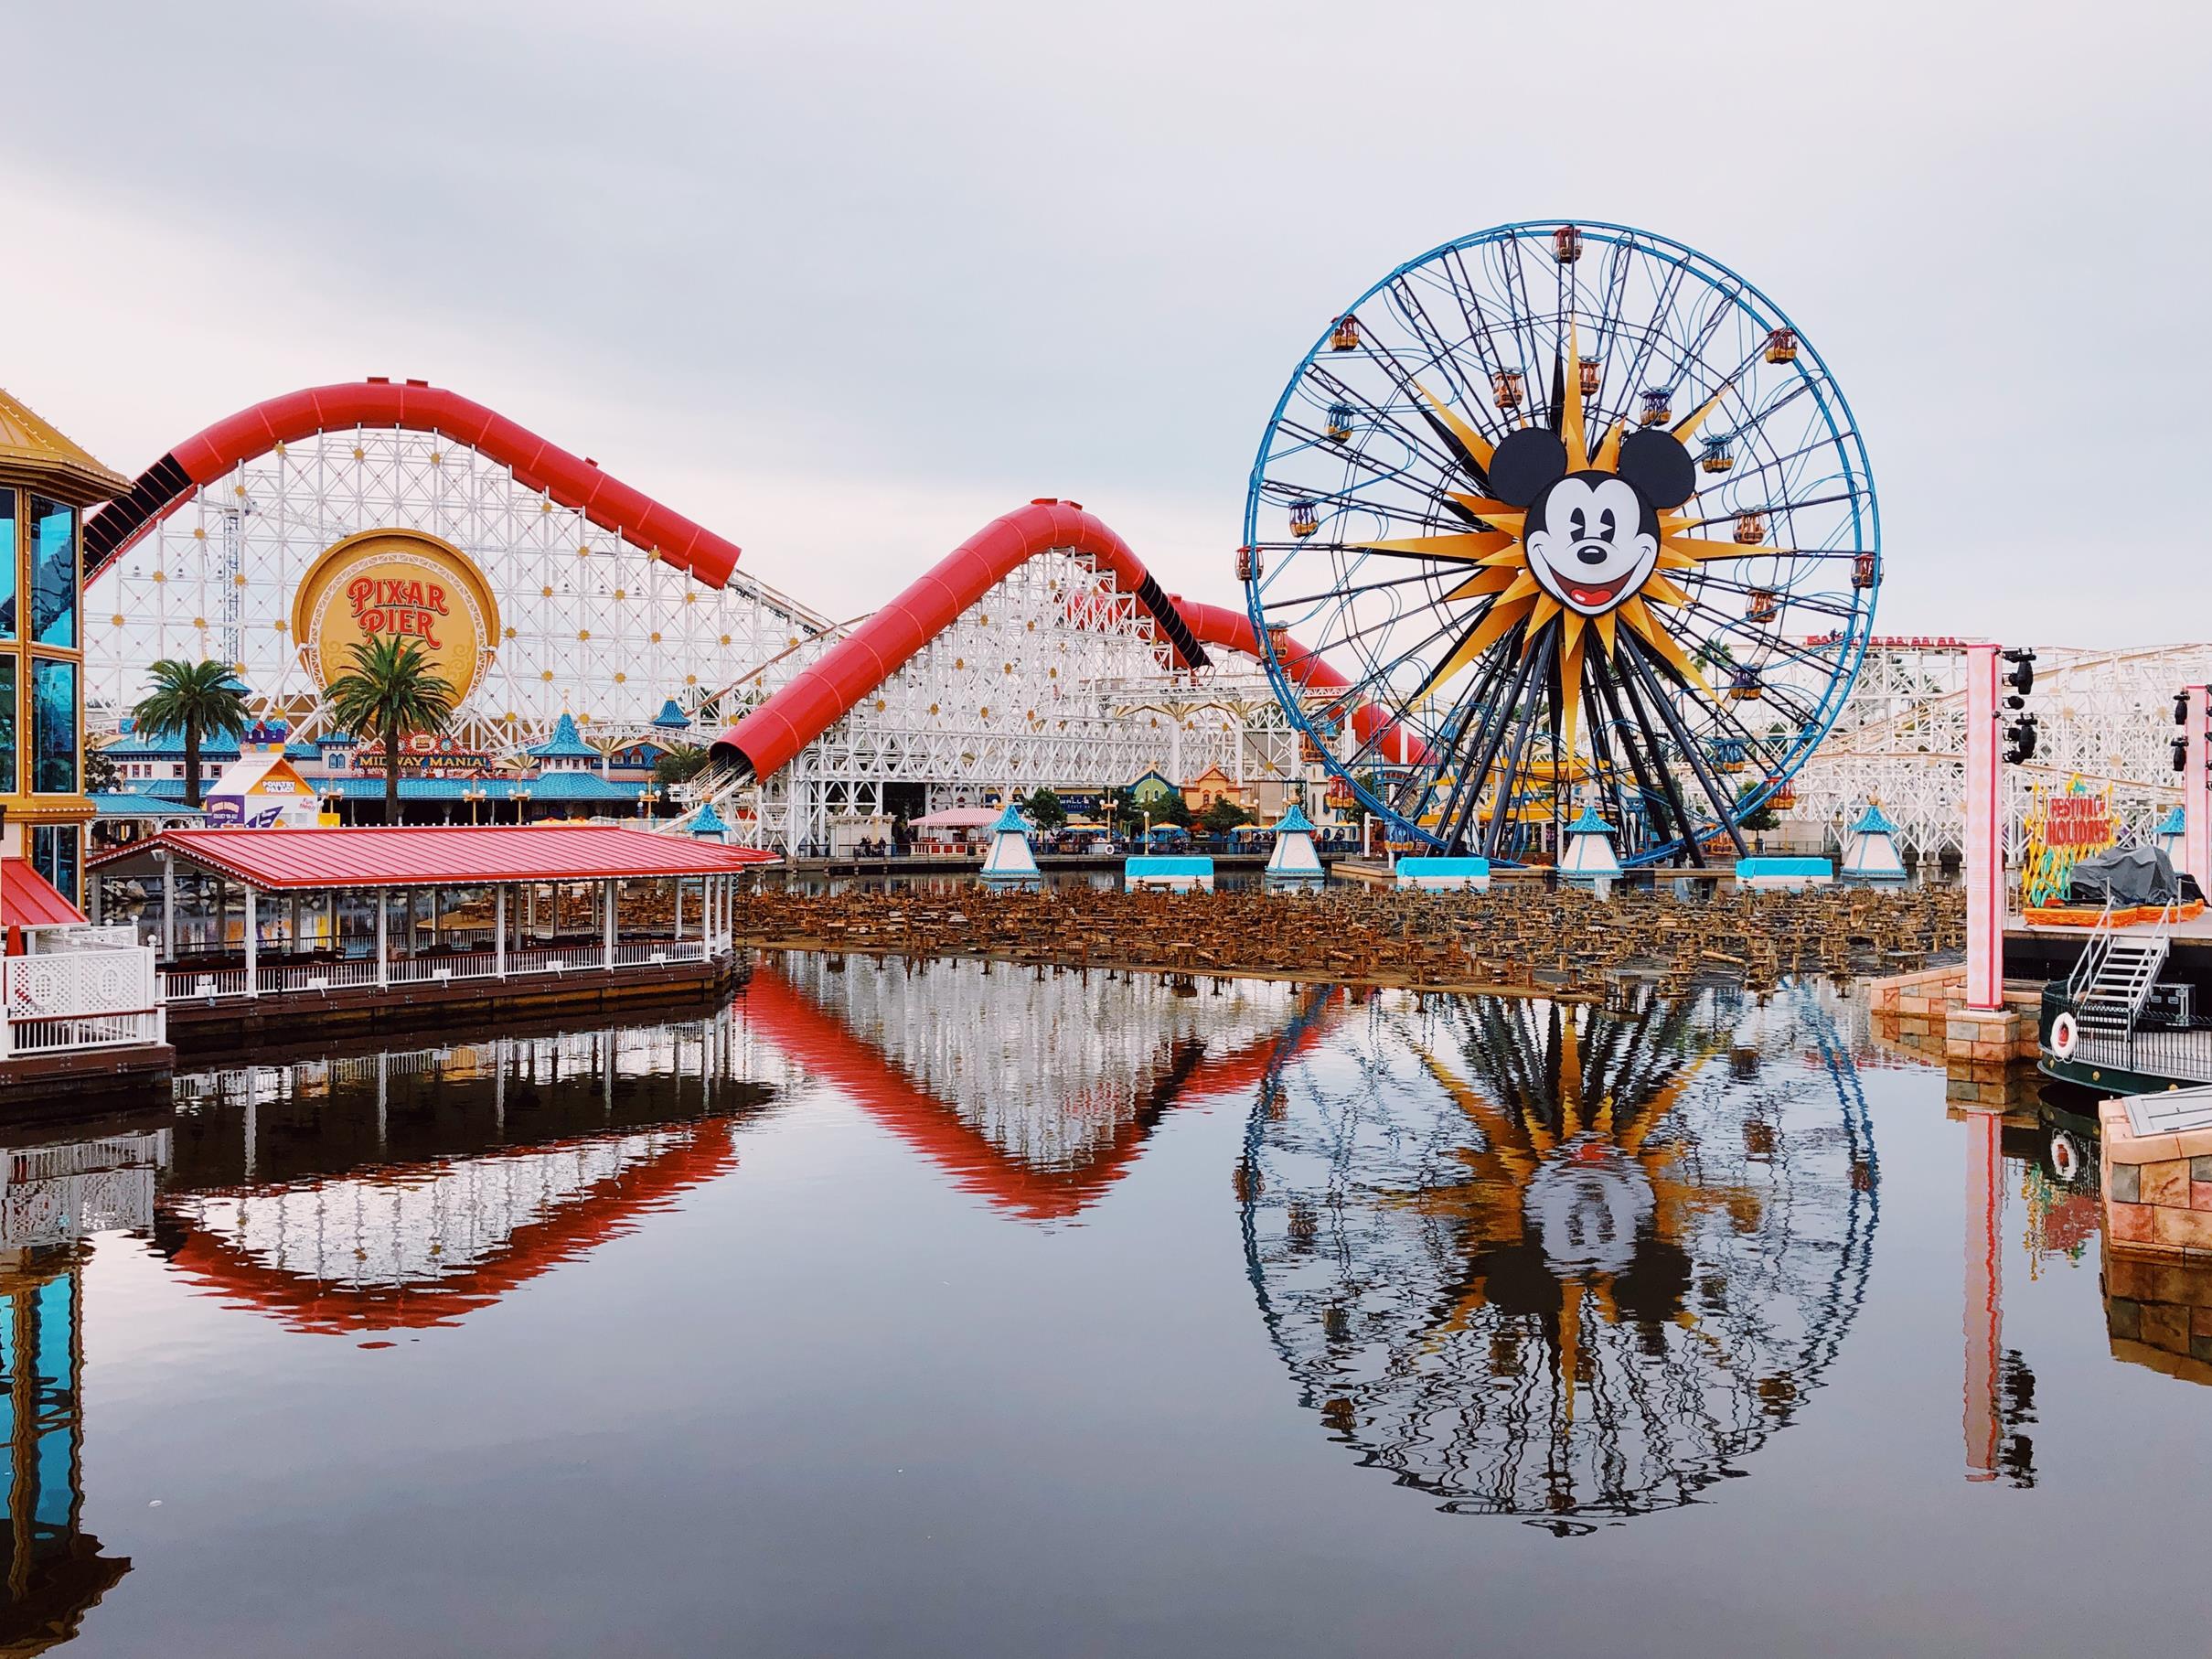 the water, ferris wheel and roller coaster of Disneyland's California Adventures Theme Park